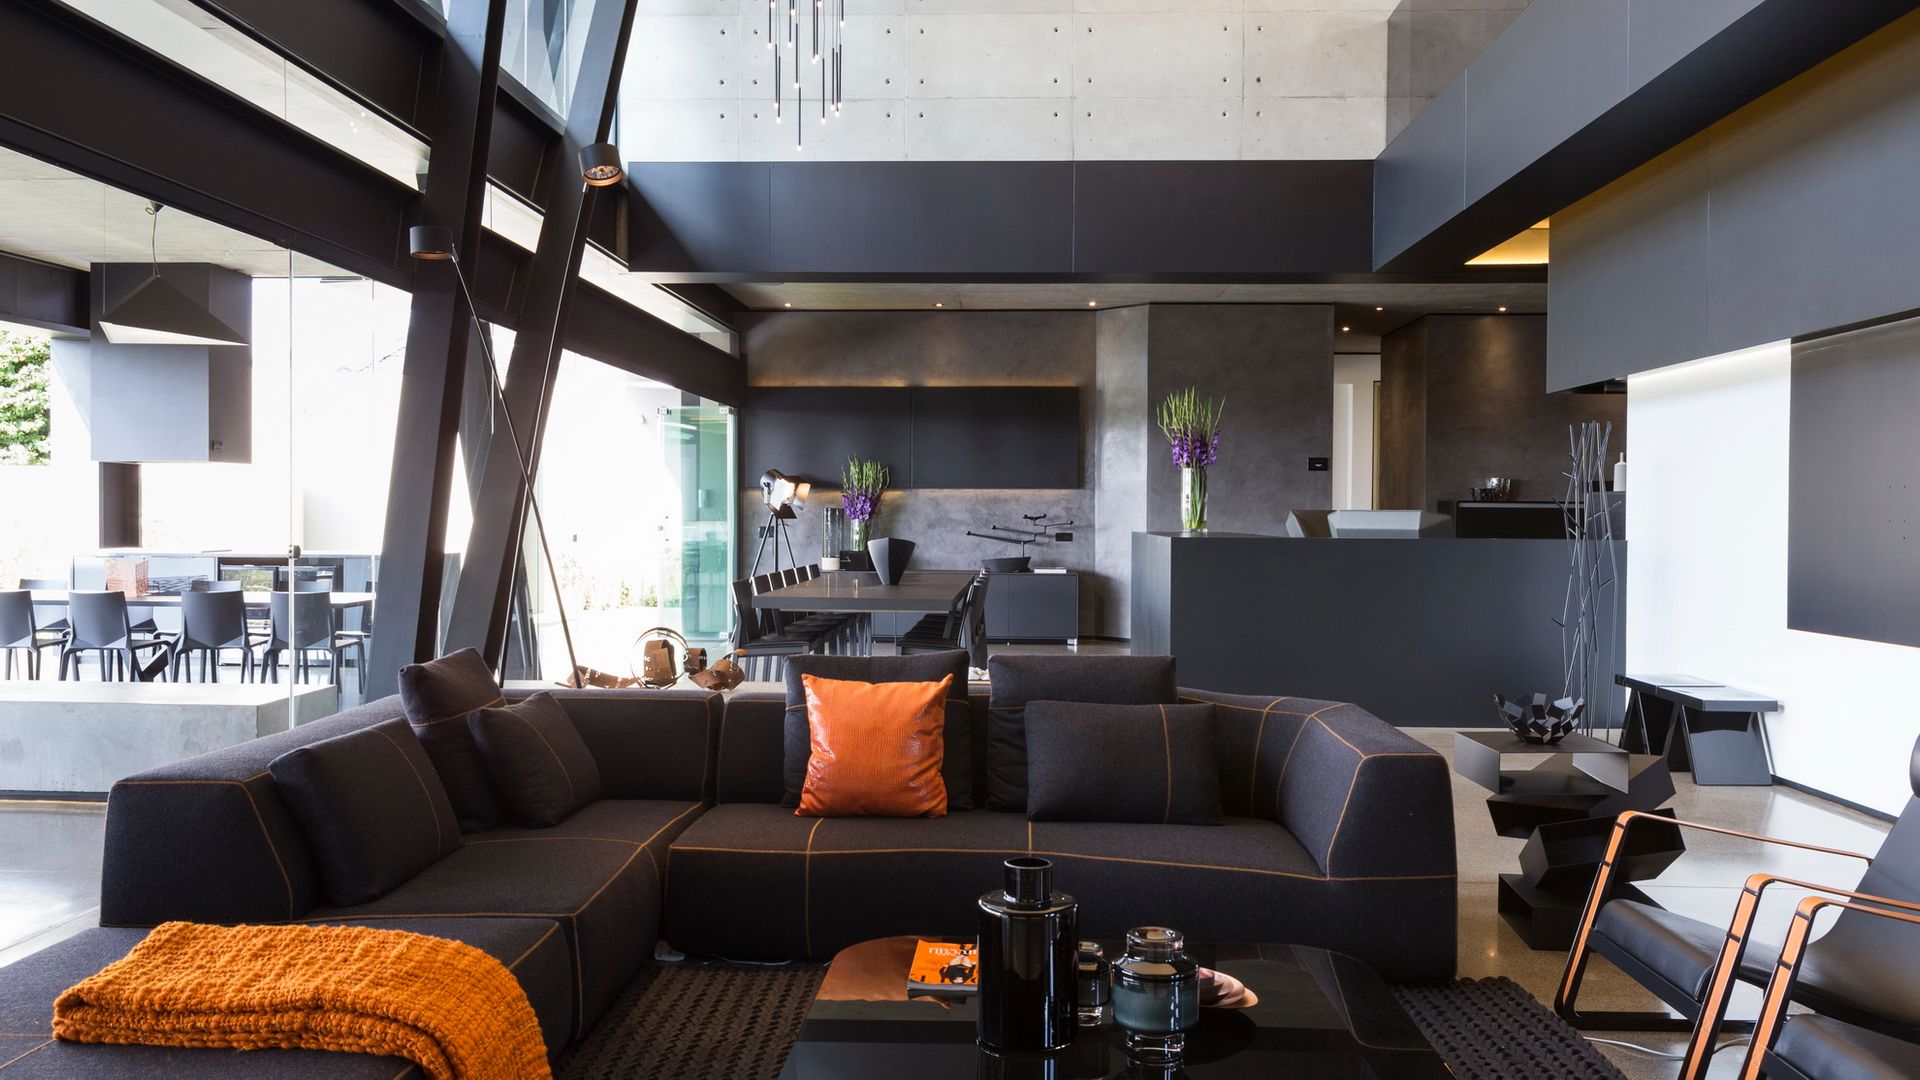 House in Kloof Road , Nico Van Der Meulen Architects Nico Van Der Meulen Architects Ruang Keluarga Modern